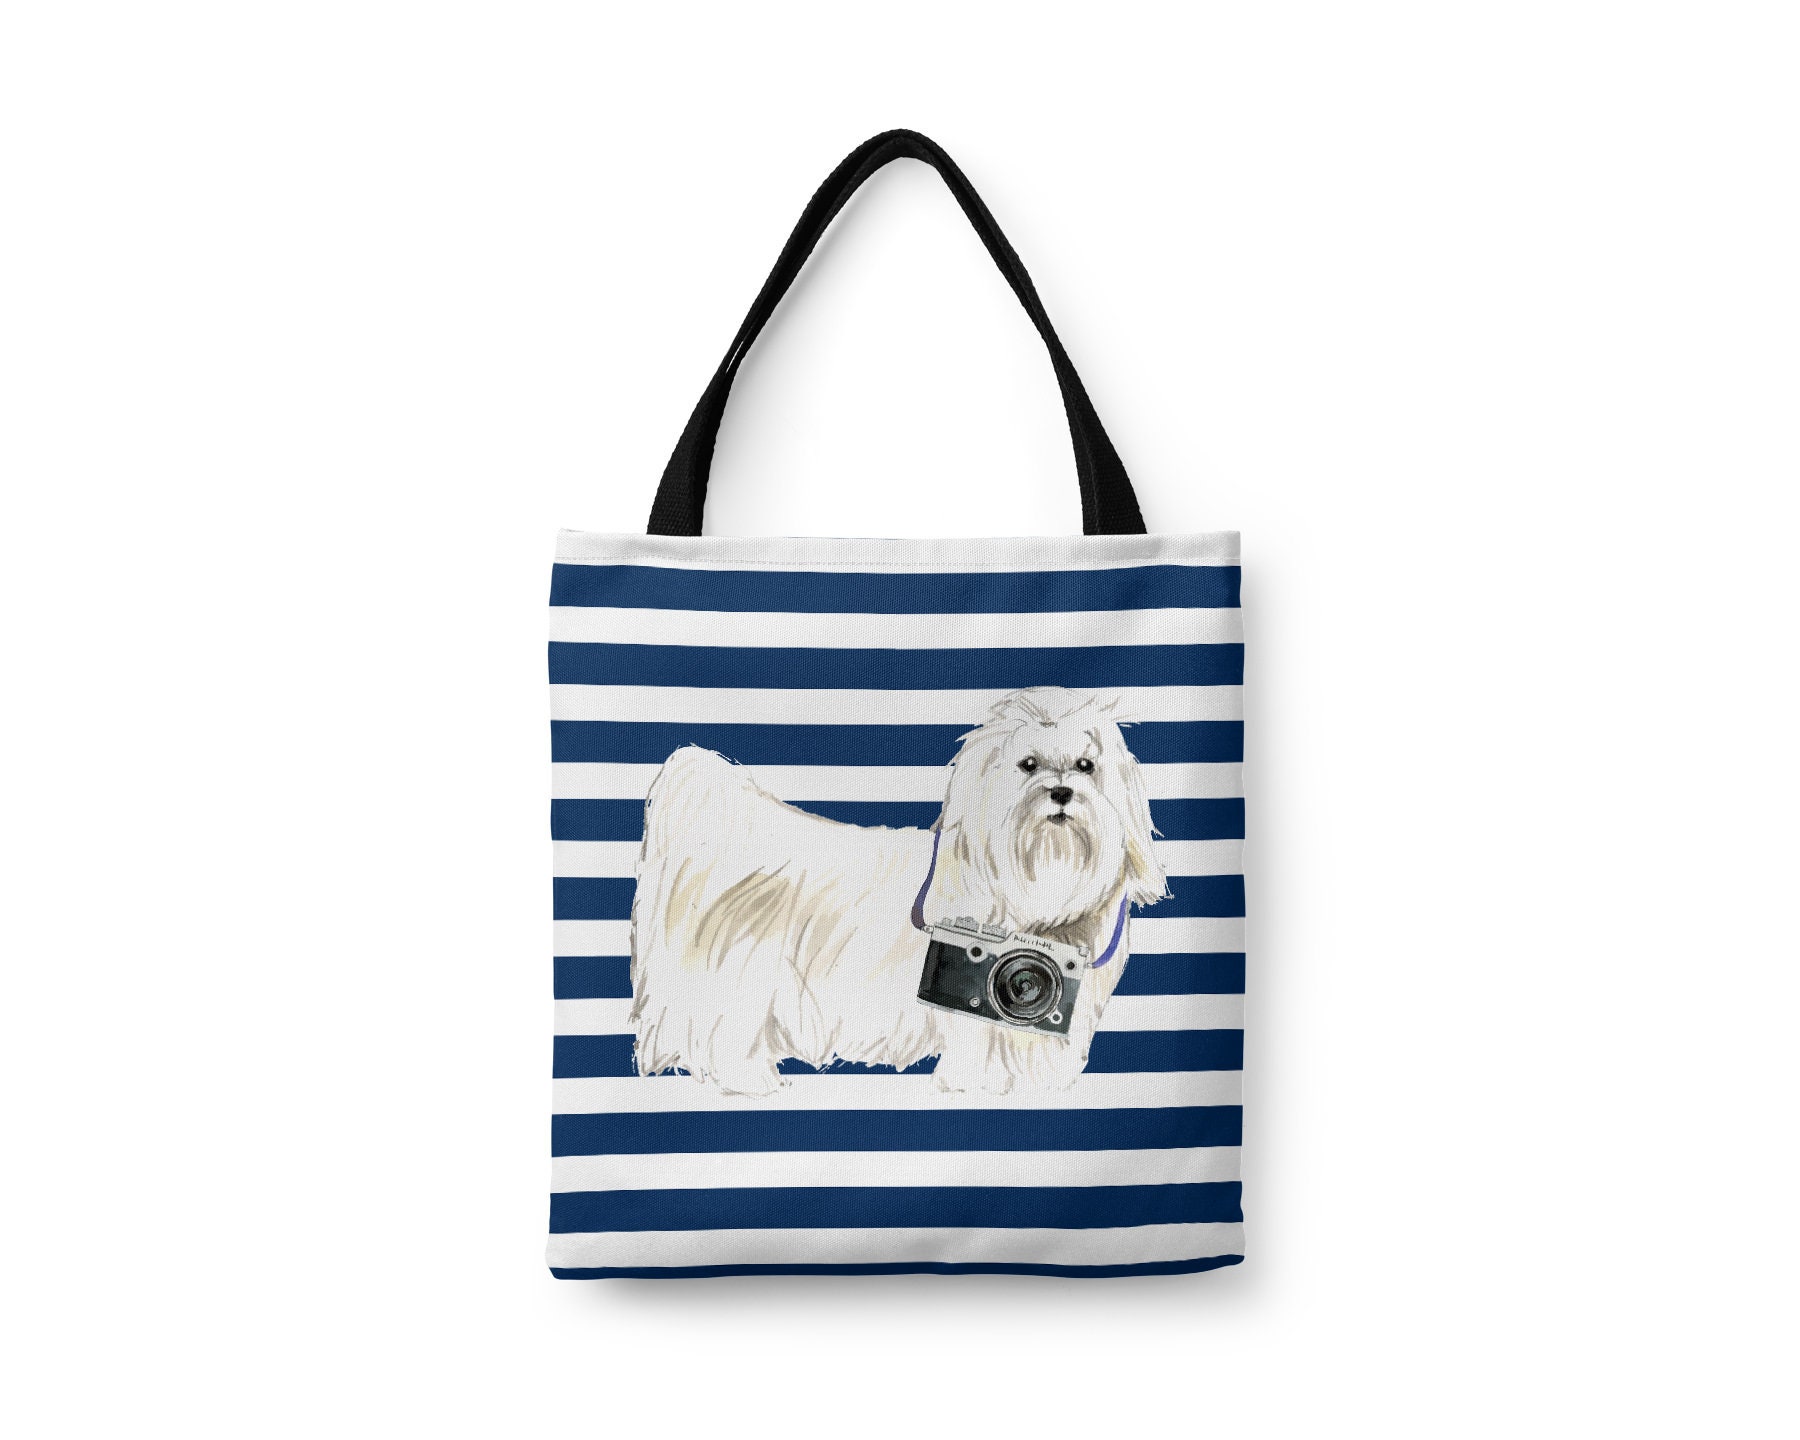 Maltese Dog Tote Bag - Illustrated Dogs & 6 Travel Inspired Styles. All Purpose For Work, Shopping, Life. Lion Dog Shoulder Bag